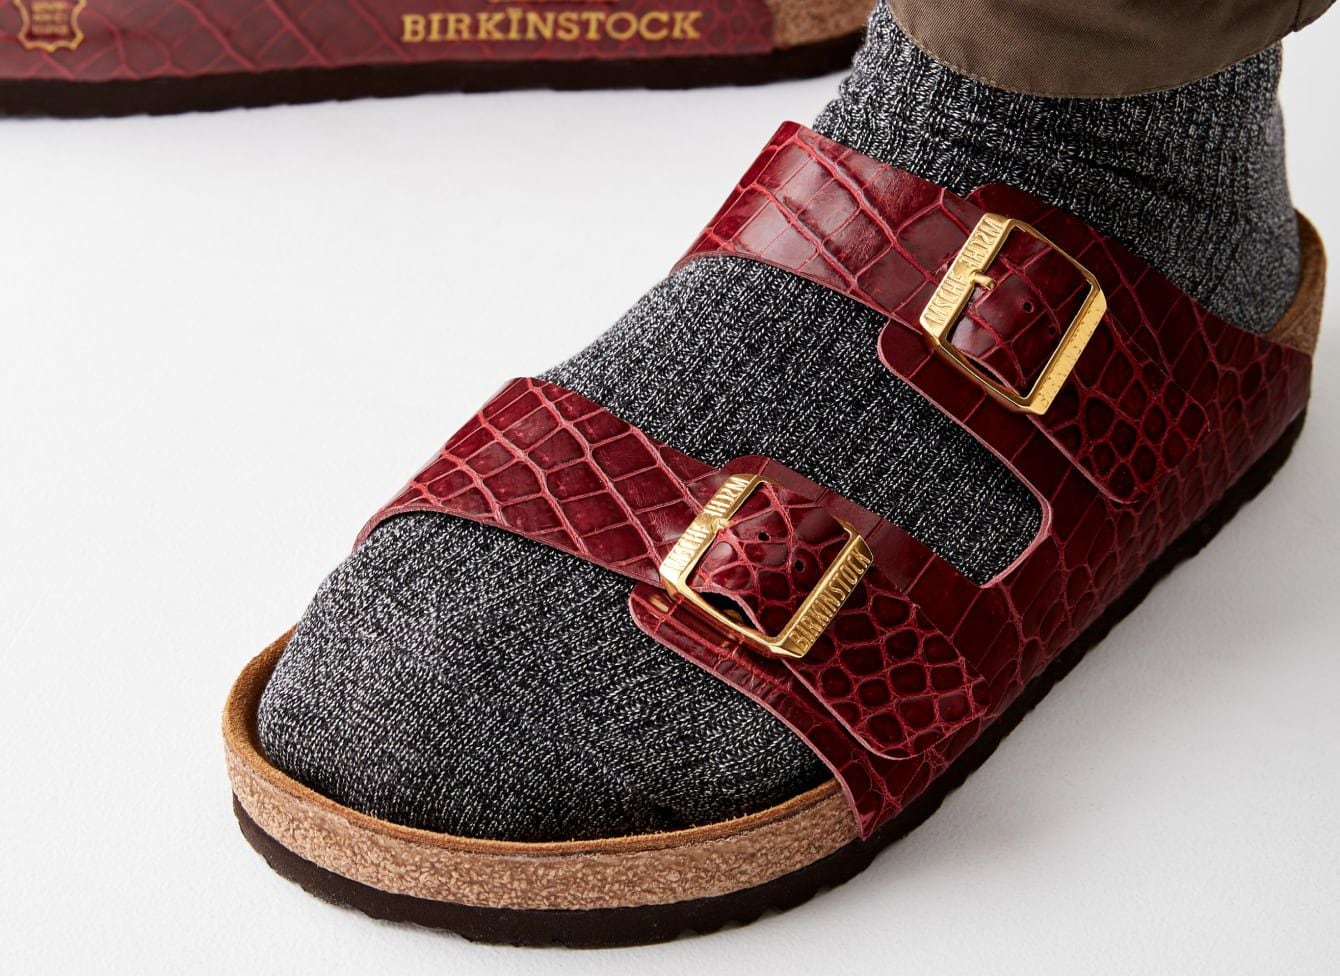 Brand Selling 'Birkinstock' Shoes Made of Hermès Birkin Bags